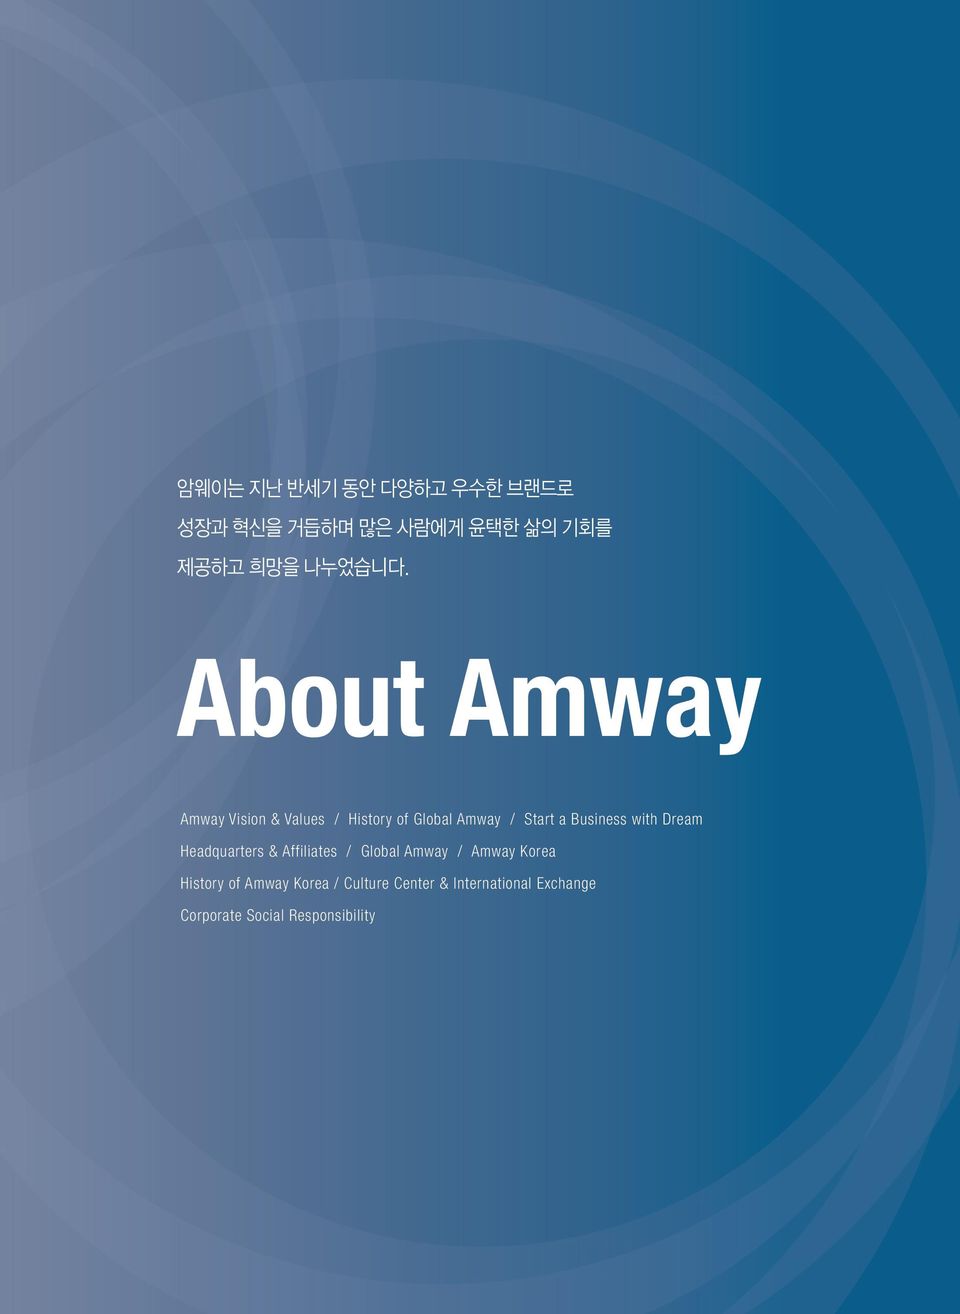 Affiliates / Global Amway / Amway Korea History of Amway